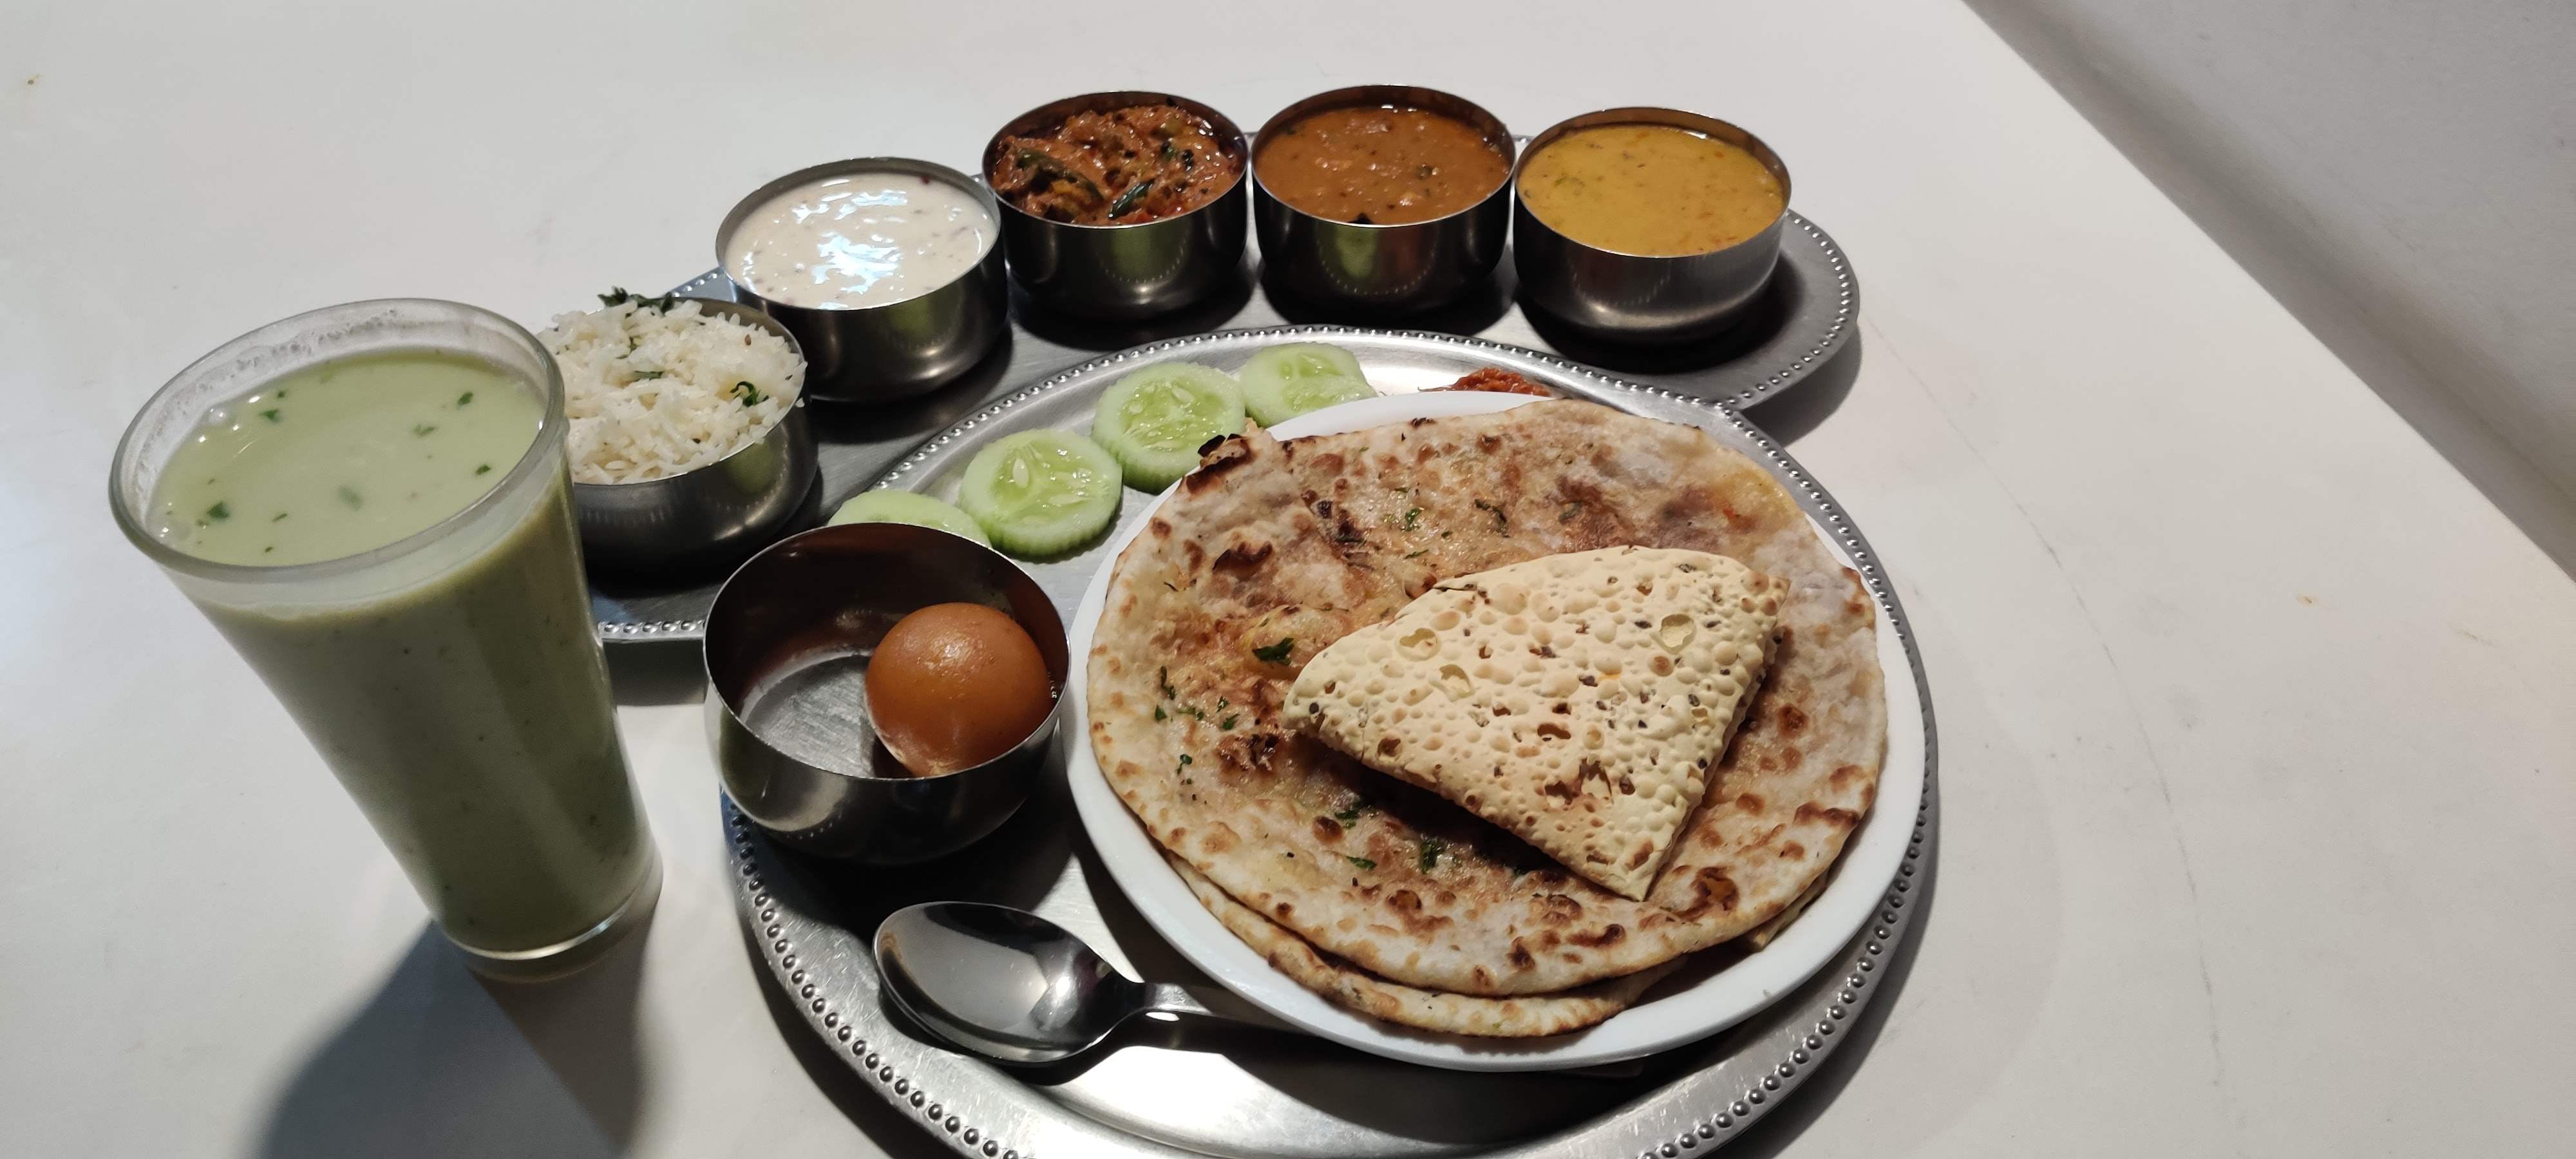 Dish,Food,Cuisine,Ingredient,Chapati,Indian cuisine,Breakfast,Roti,Malawach,Produce